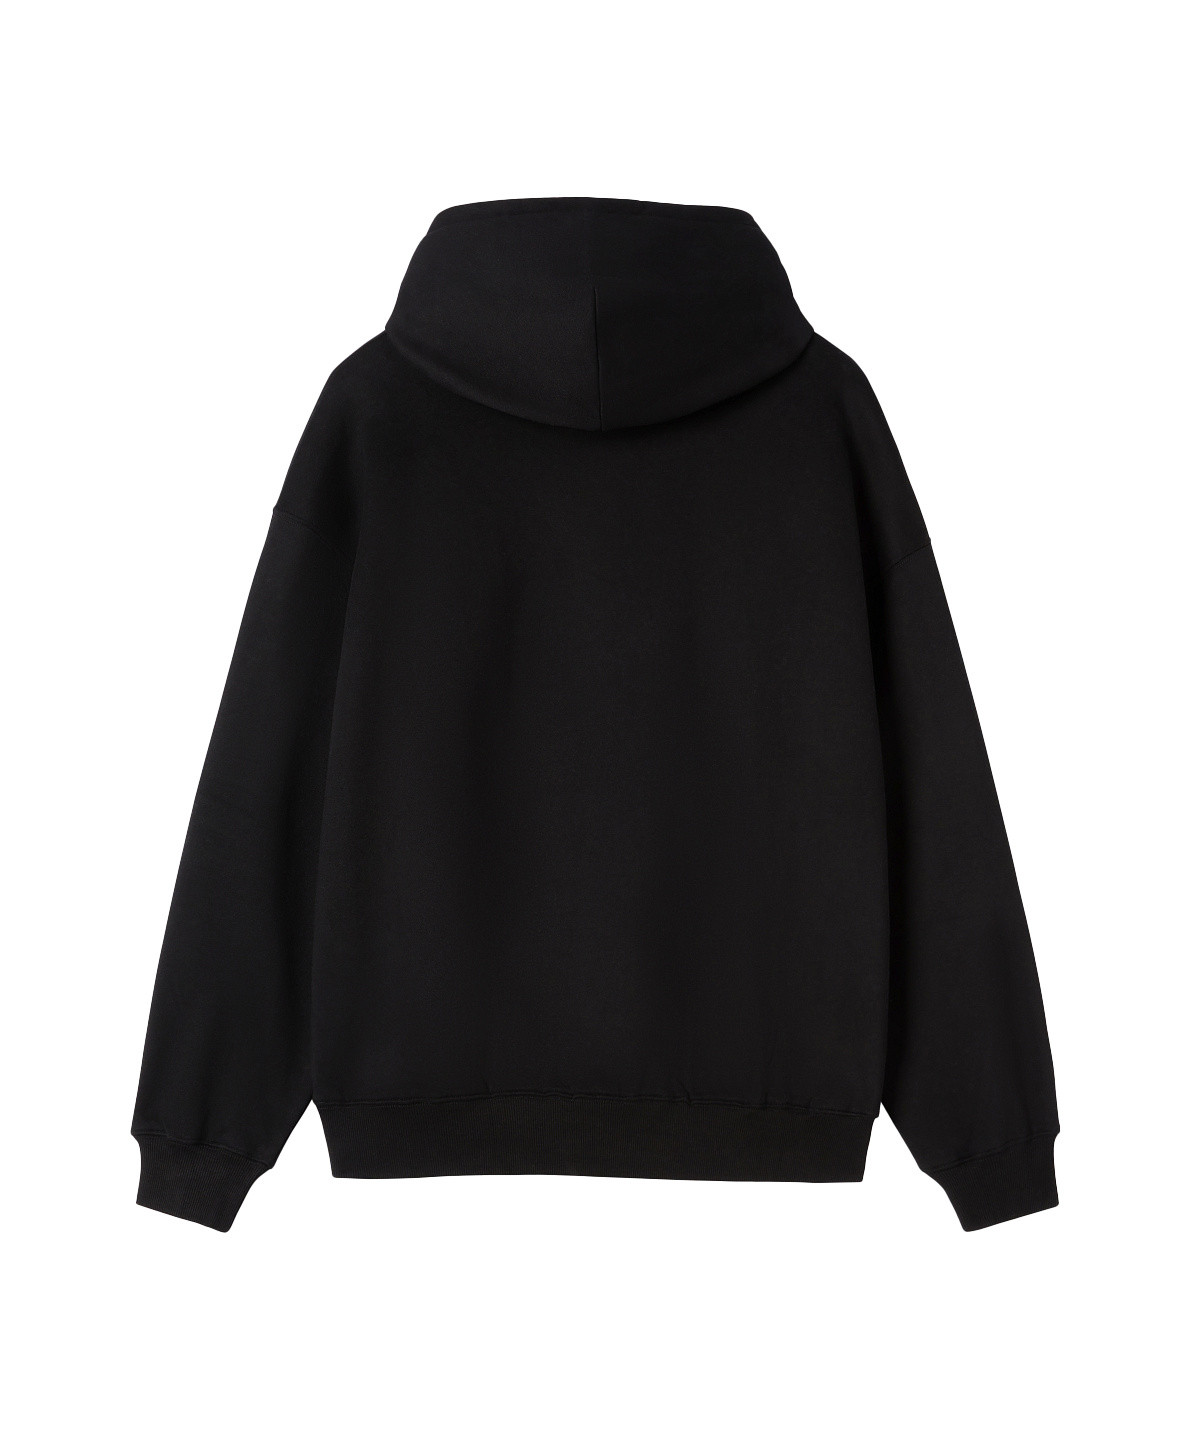 Funky - Oval logo hoodie, Black, large image number 1